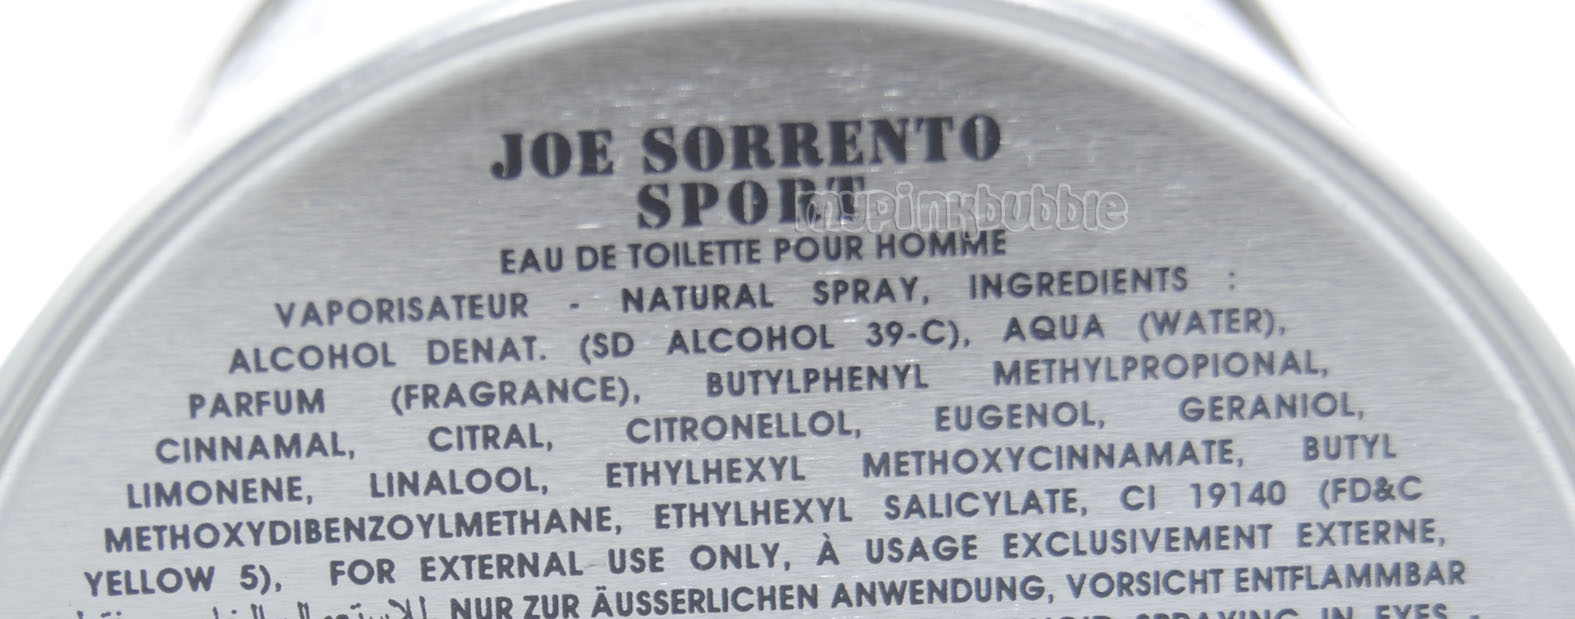 Joe Sorrento Sport Jeannes Arthes ingredientes